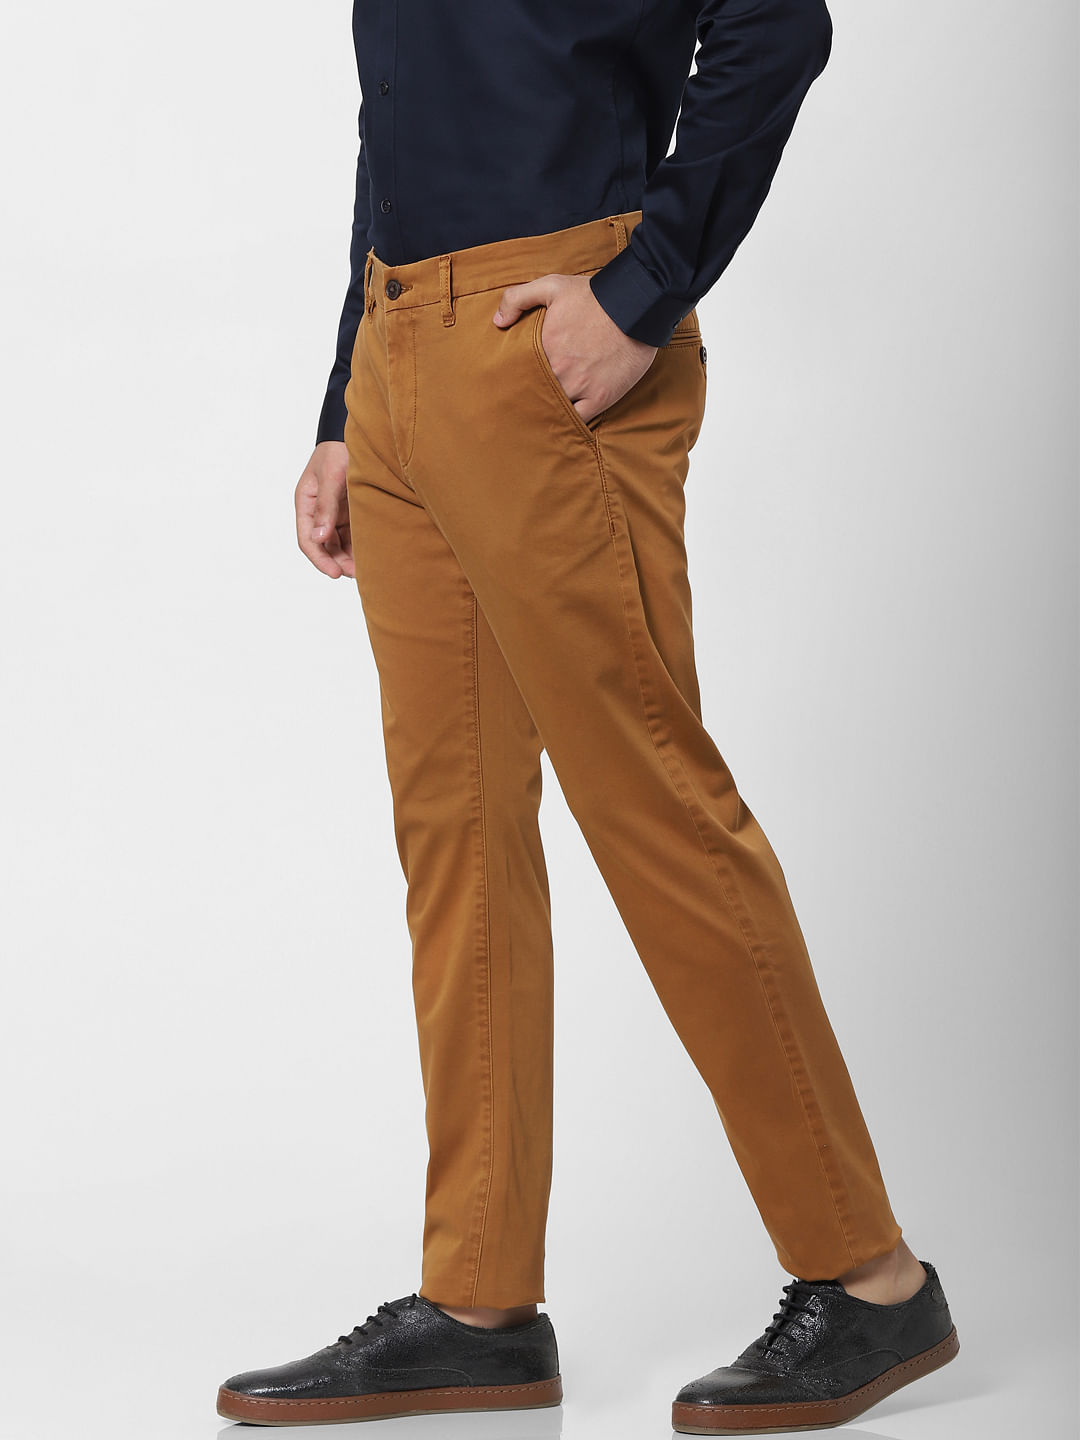 New Chinos Shorts Mens Summer Smart Casual Work Half Pants Cotton  eBay